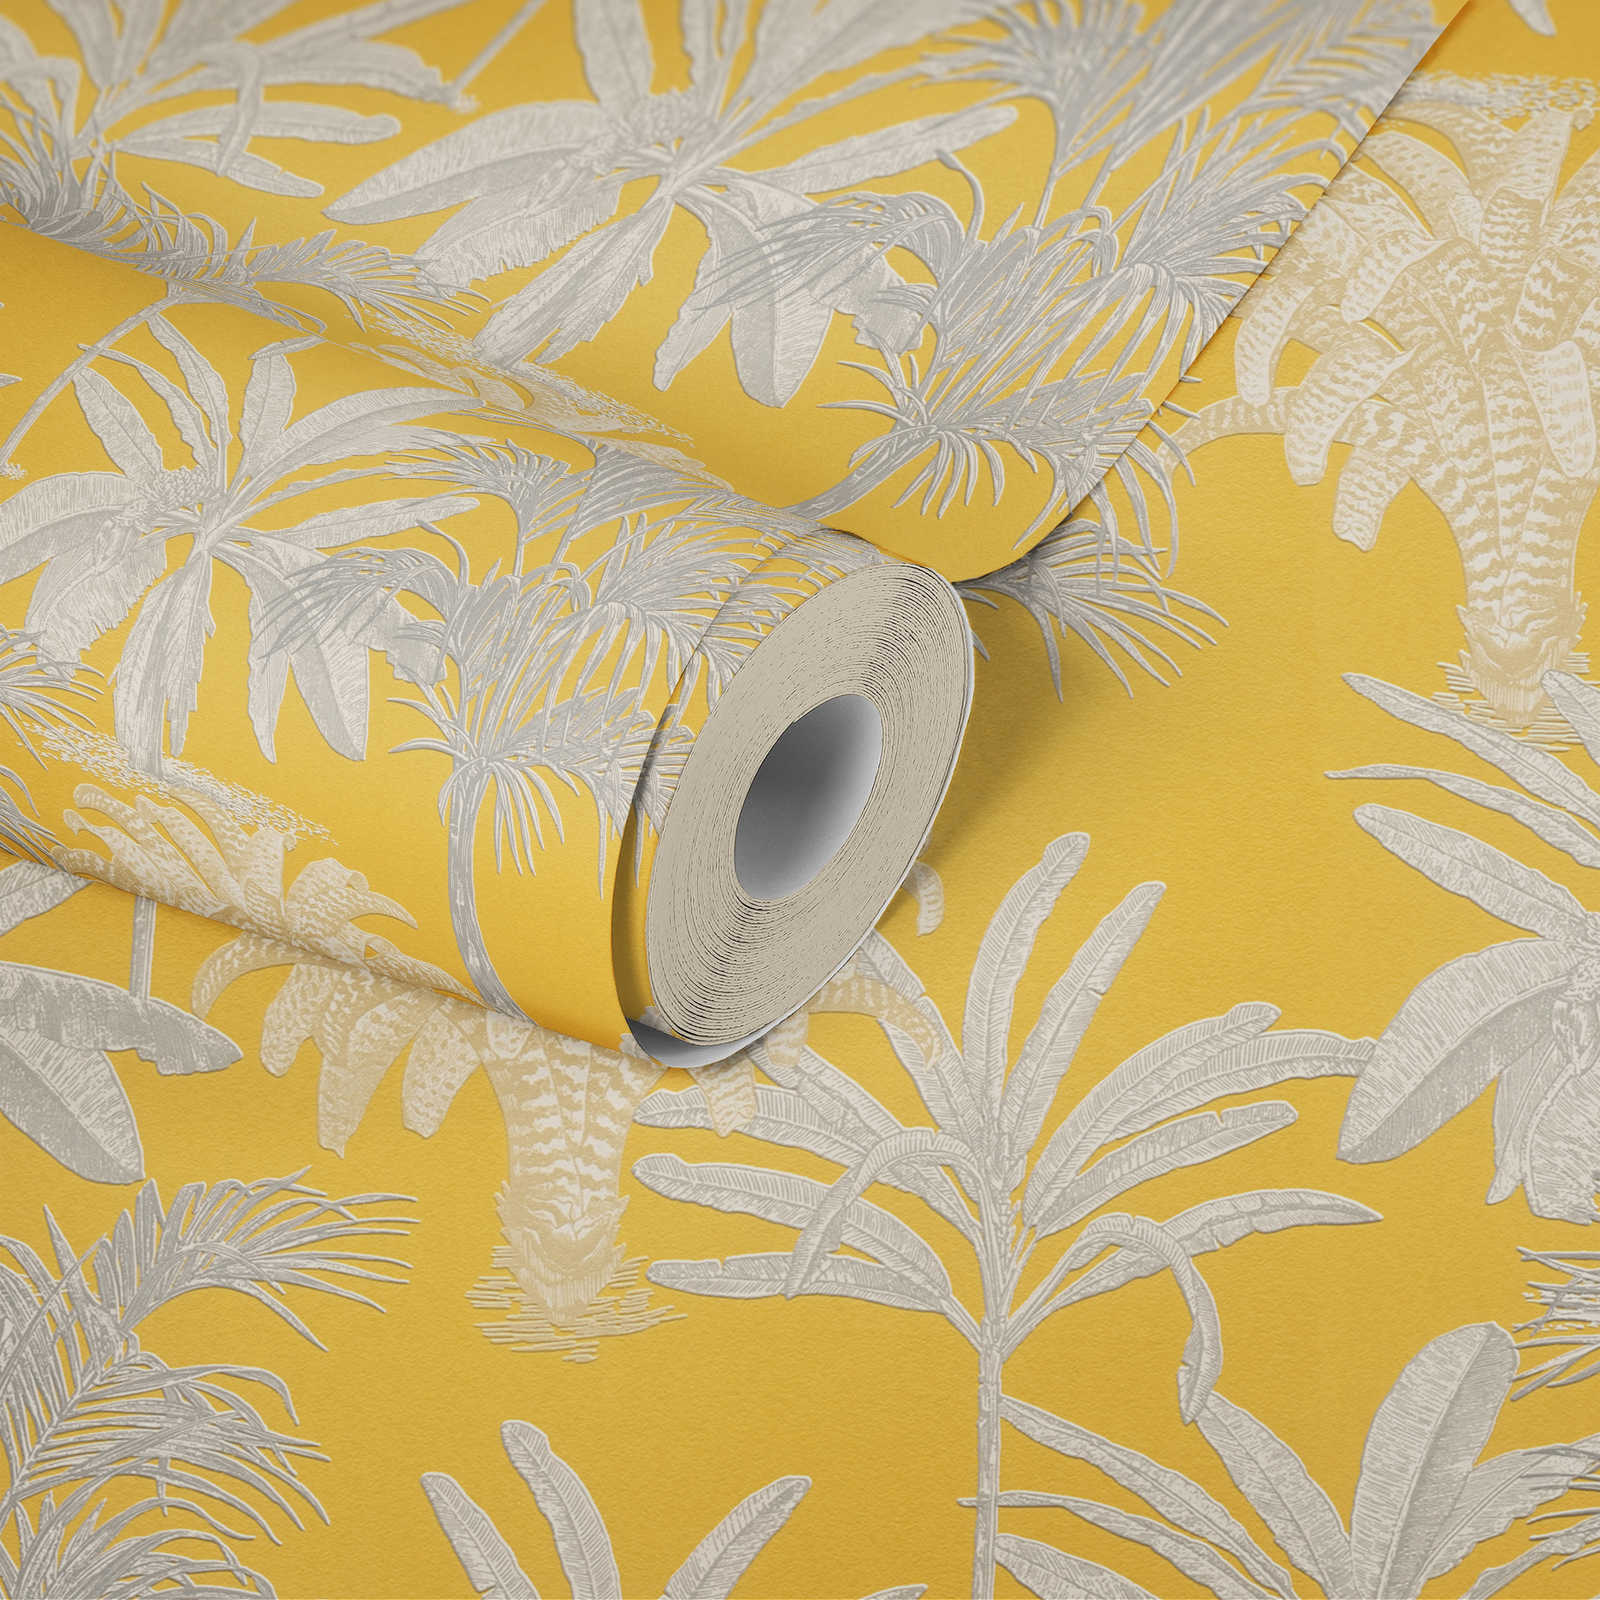             Palmen Tapete Senfgelb mit Strukturmuster – Gelb, Grau
        